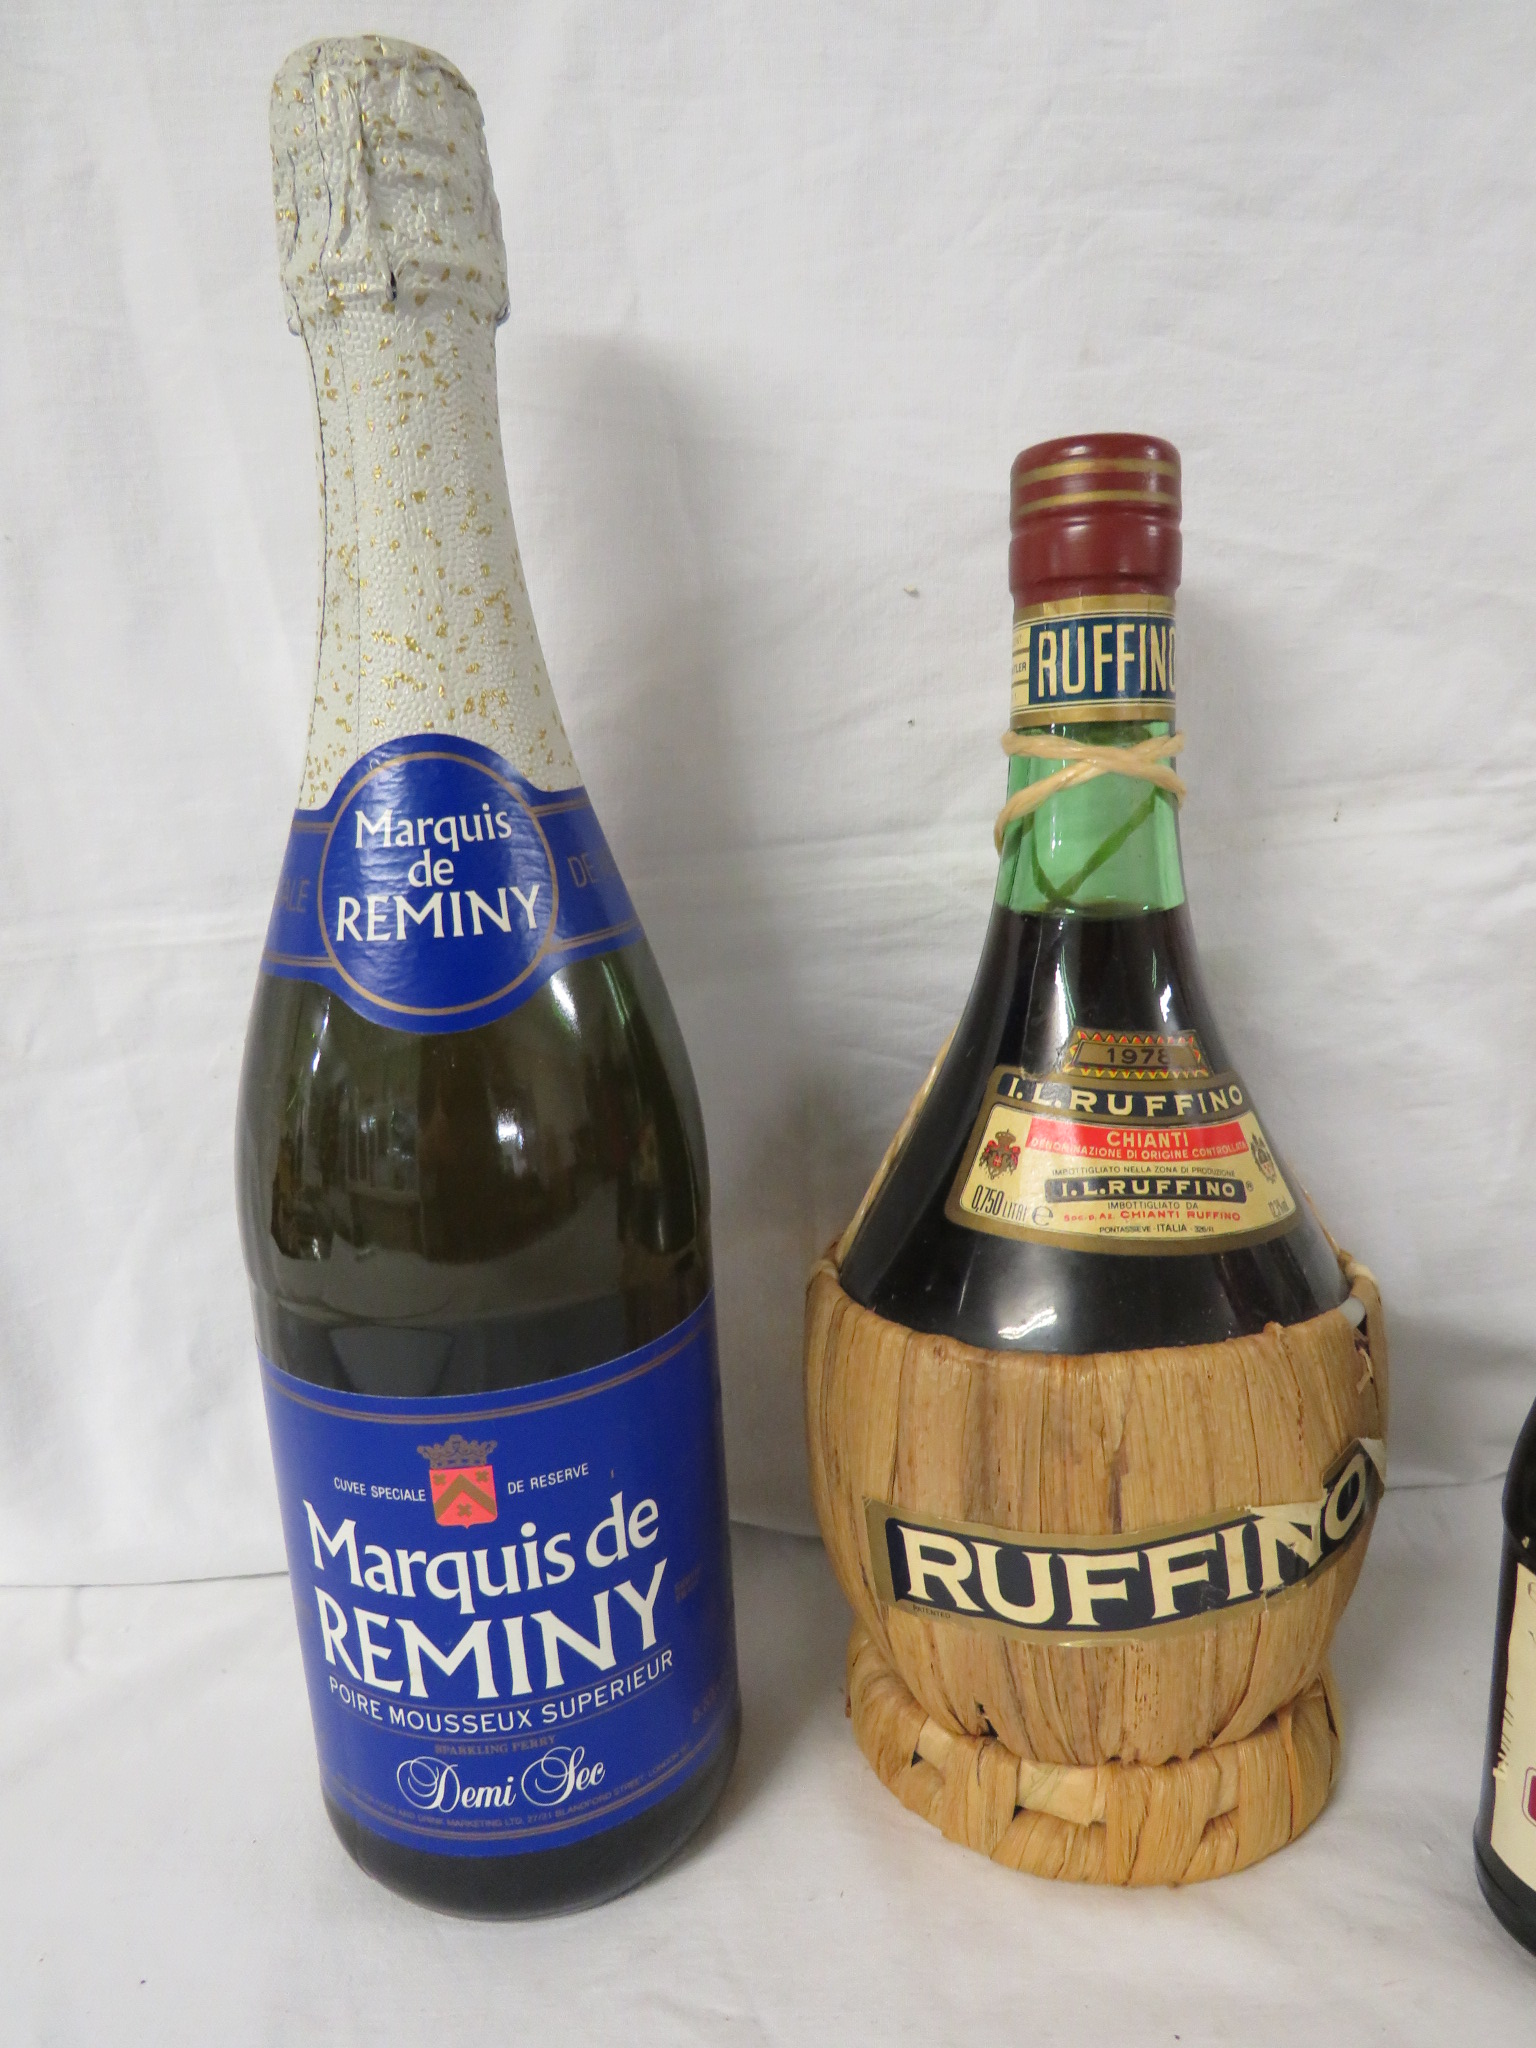 Bottle of Marquis de Reminy Cuvee Speciale de Reserve 75cl, bottle of I. L. Ruffino 1978 Chianti 0. - Image 2 of 3